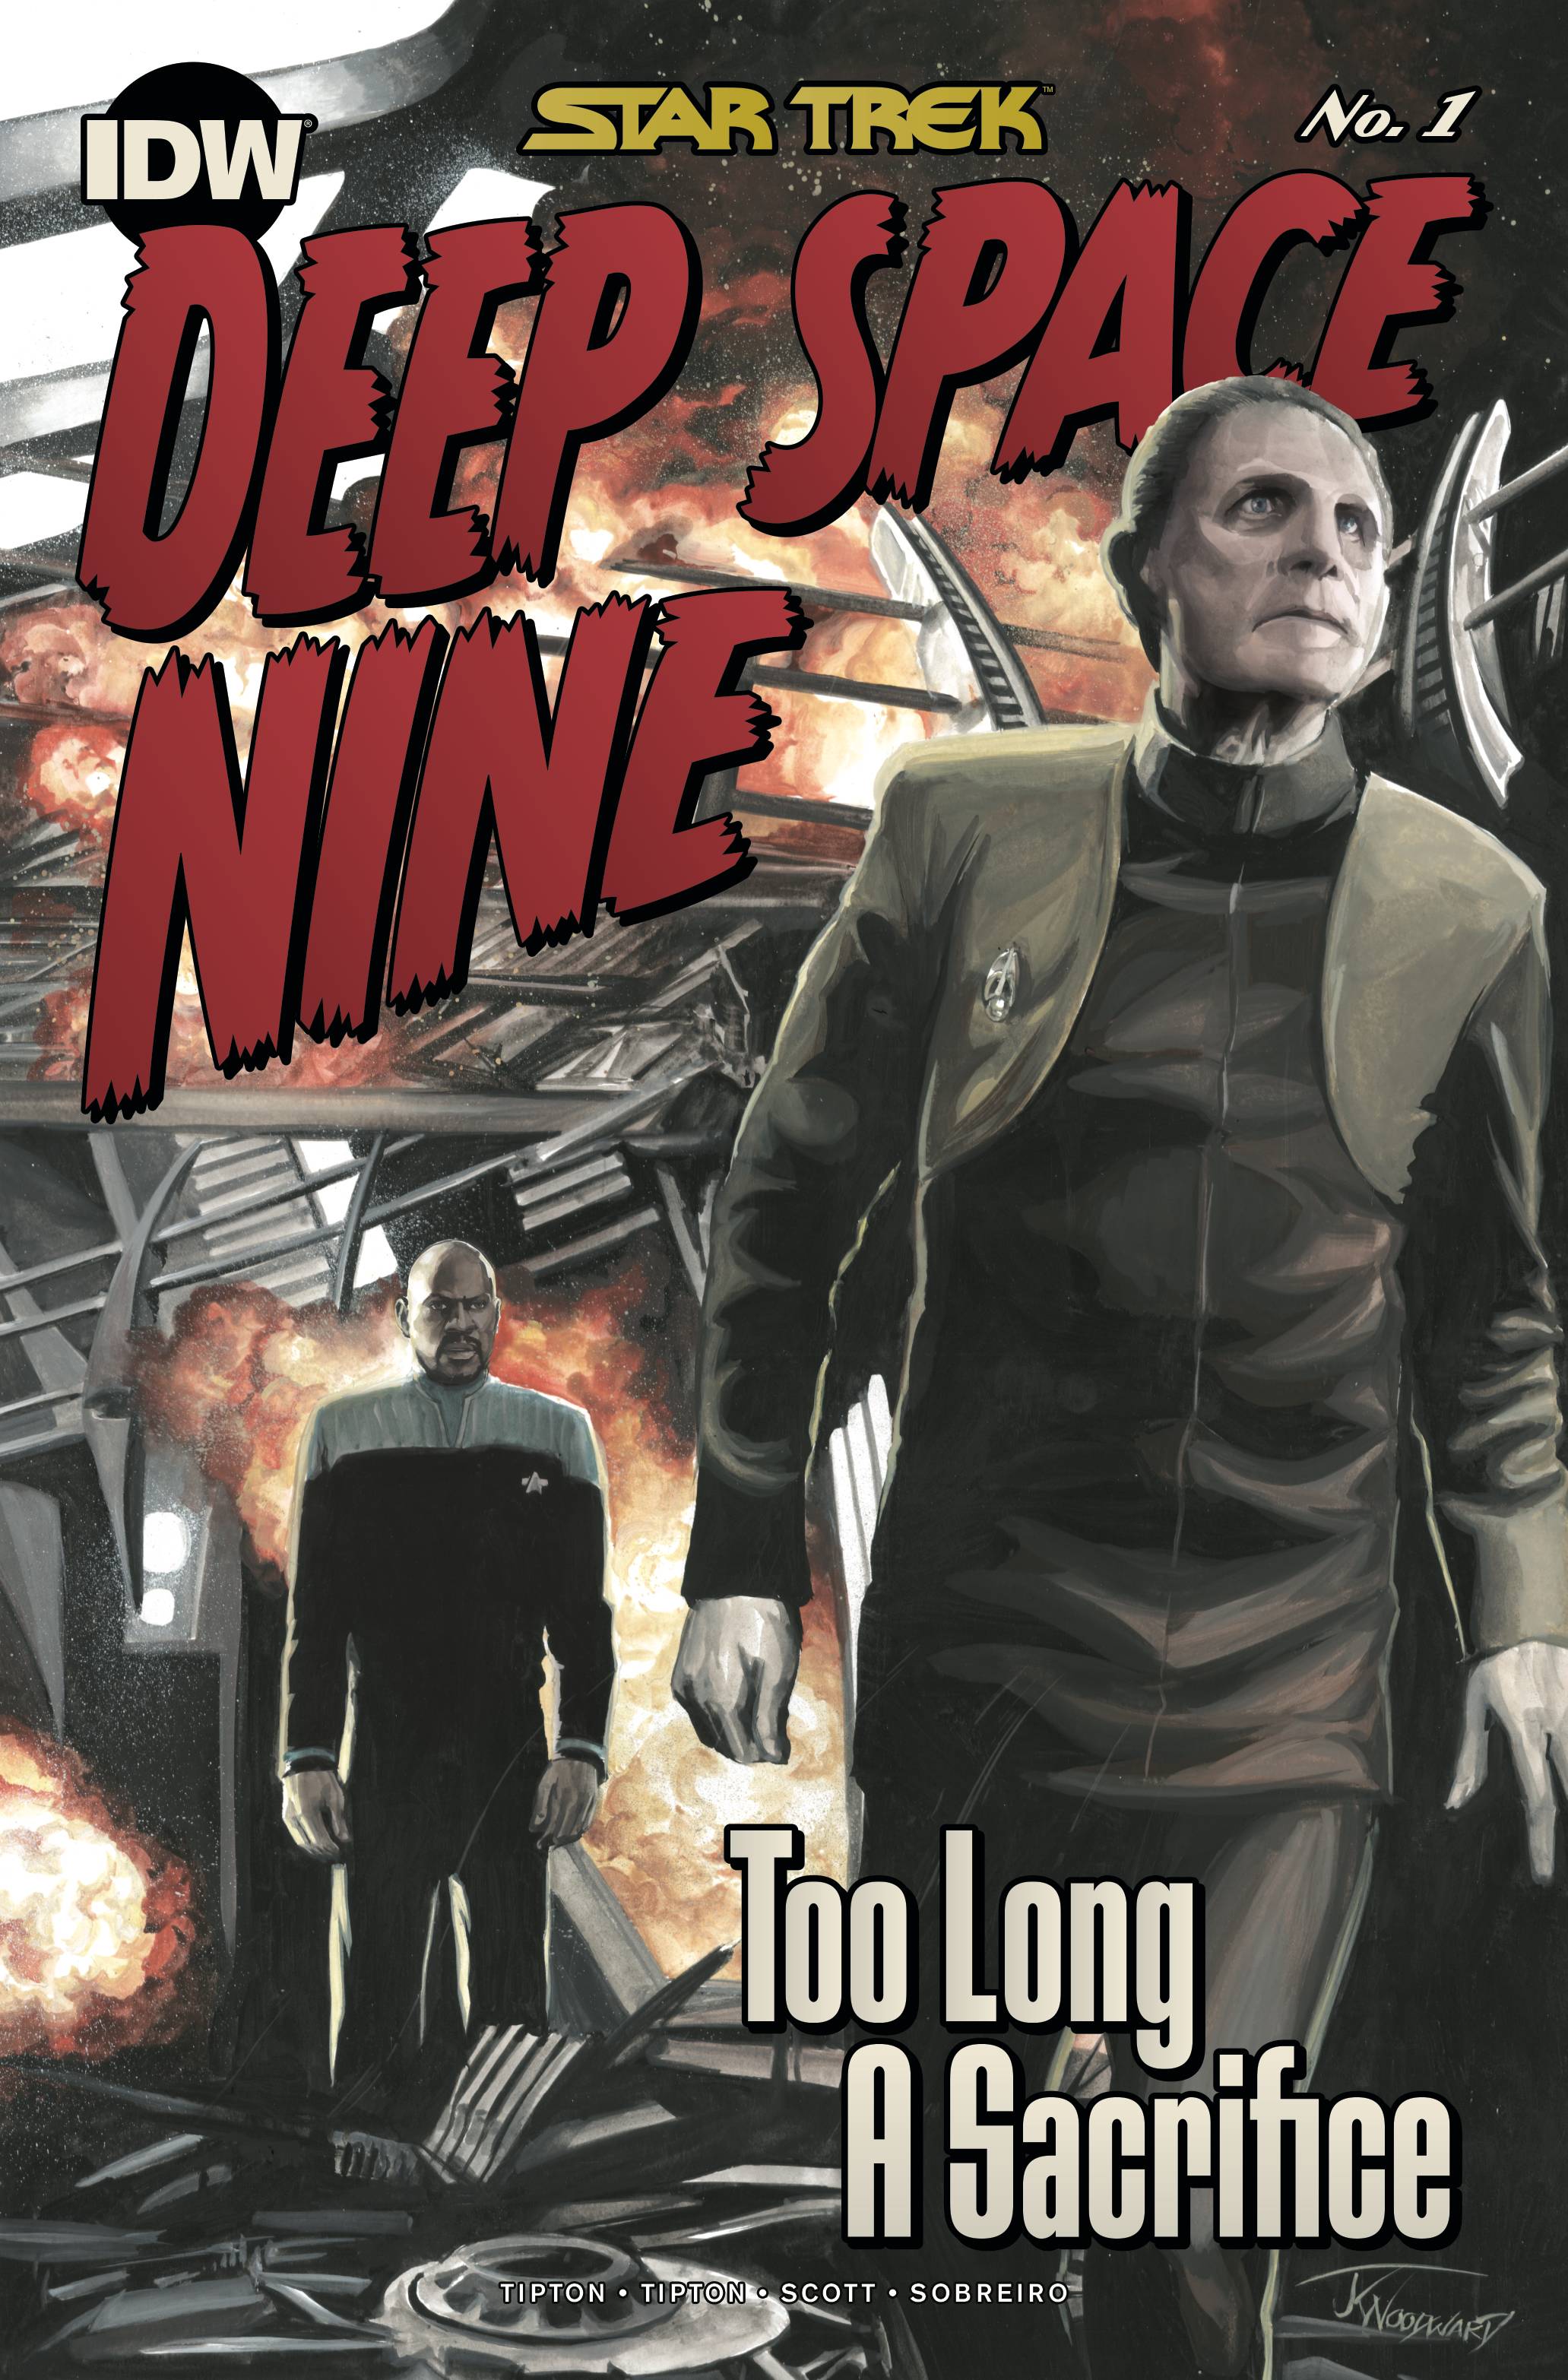 Star Trek Deep Space Nine Too Long A Sacrifice #1 1 for 10 Incentive Woodward